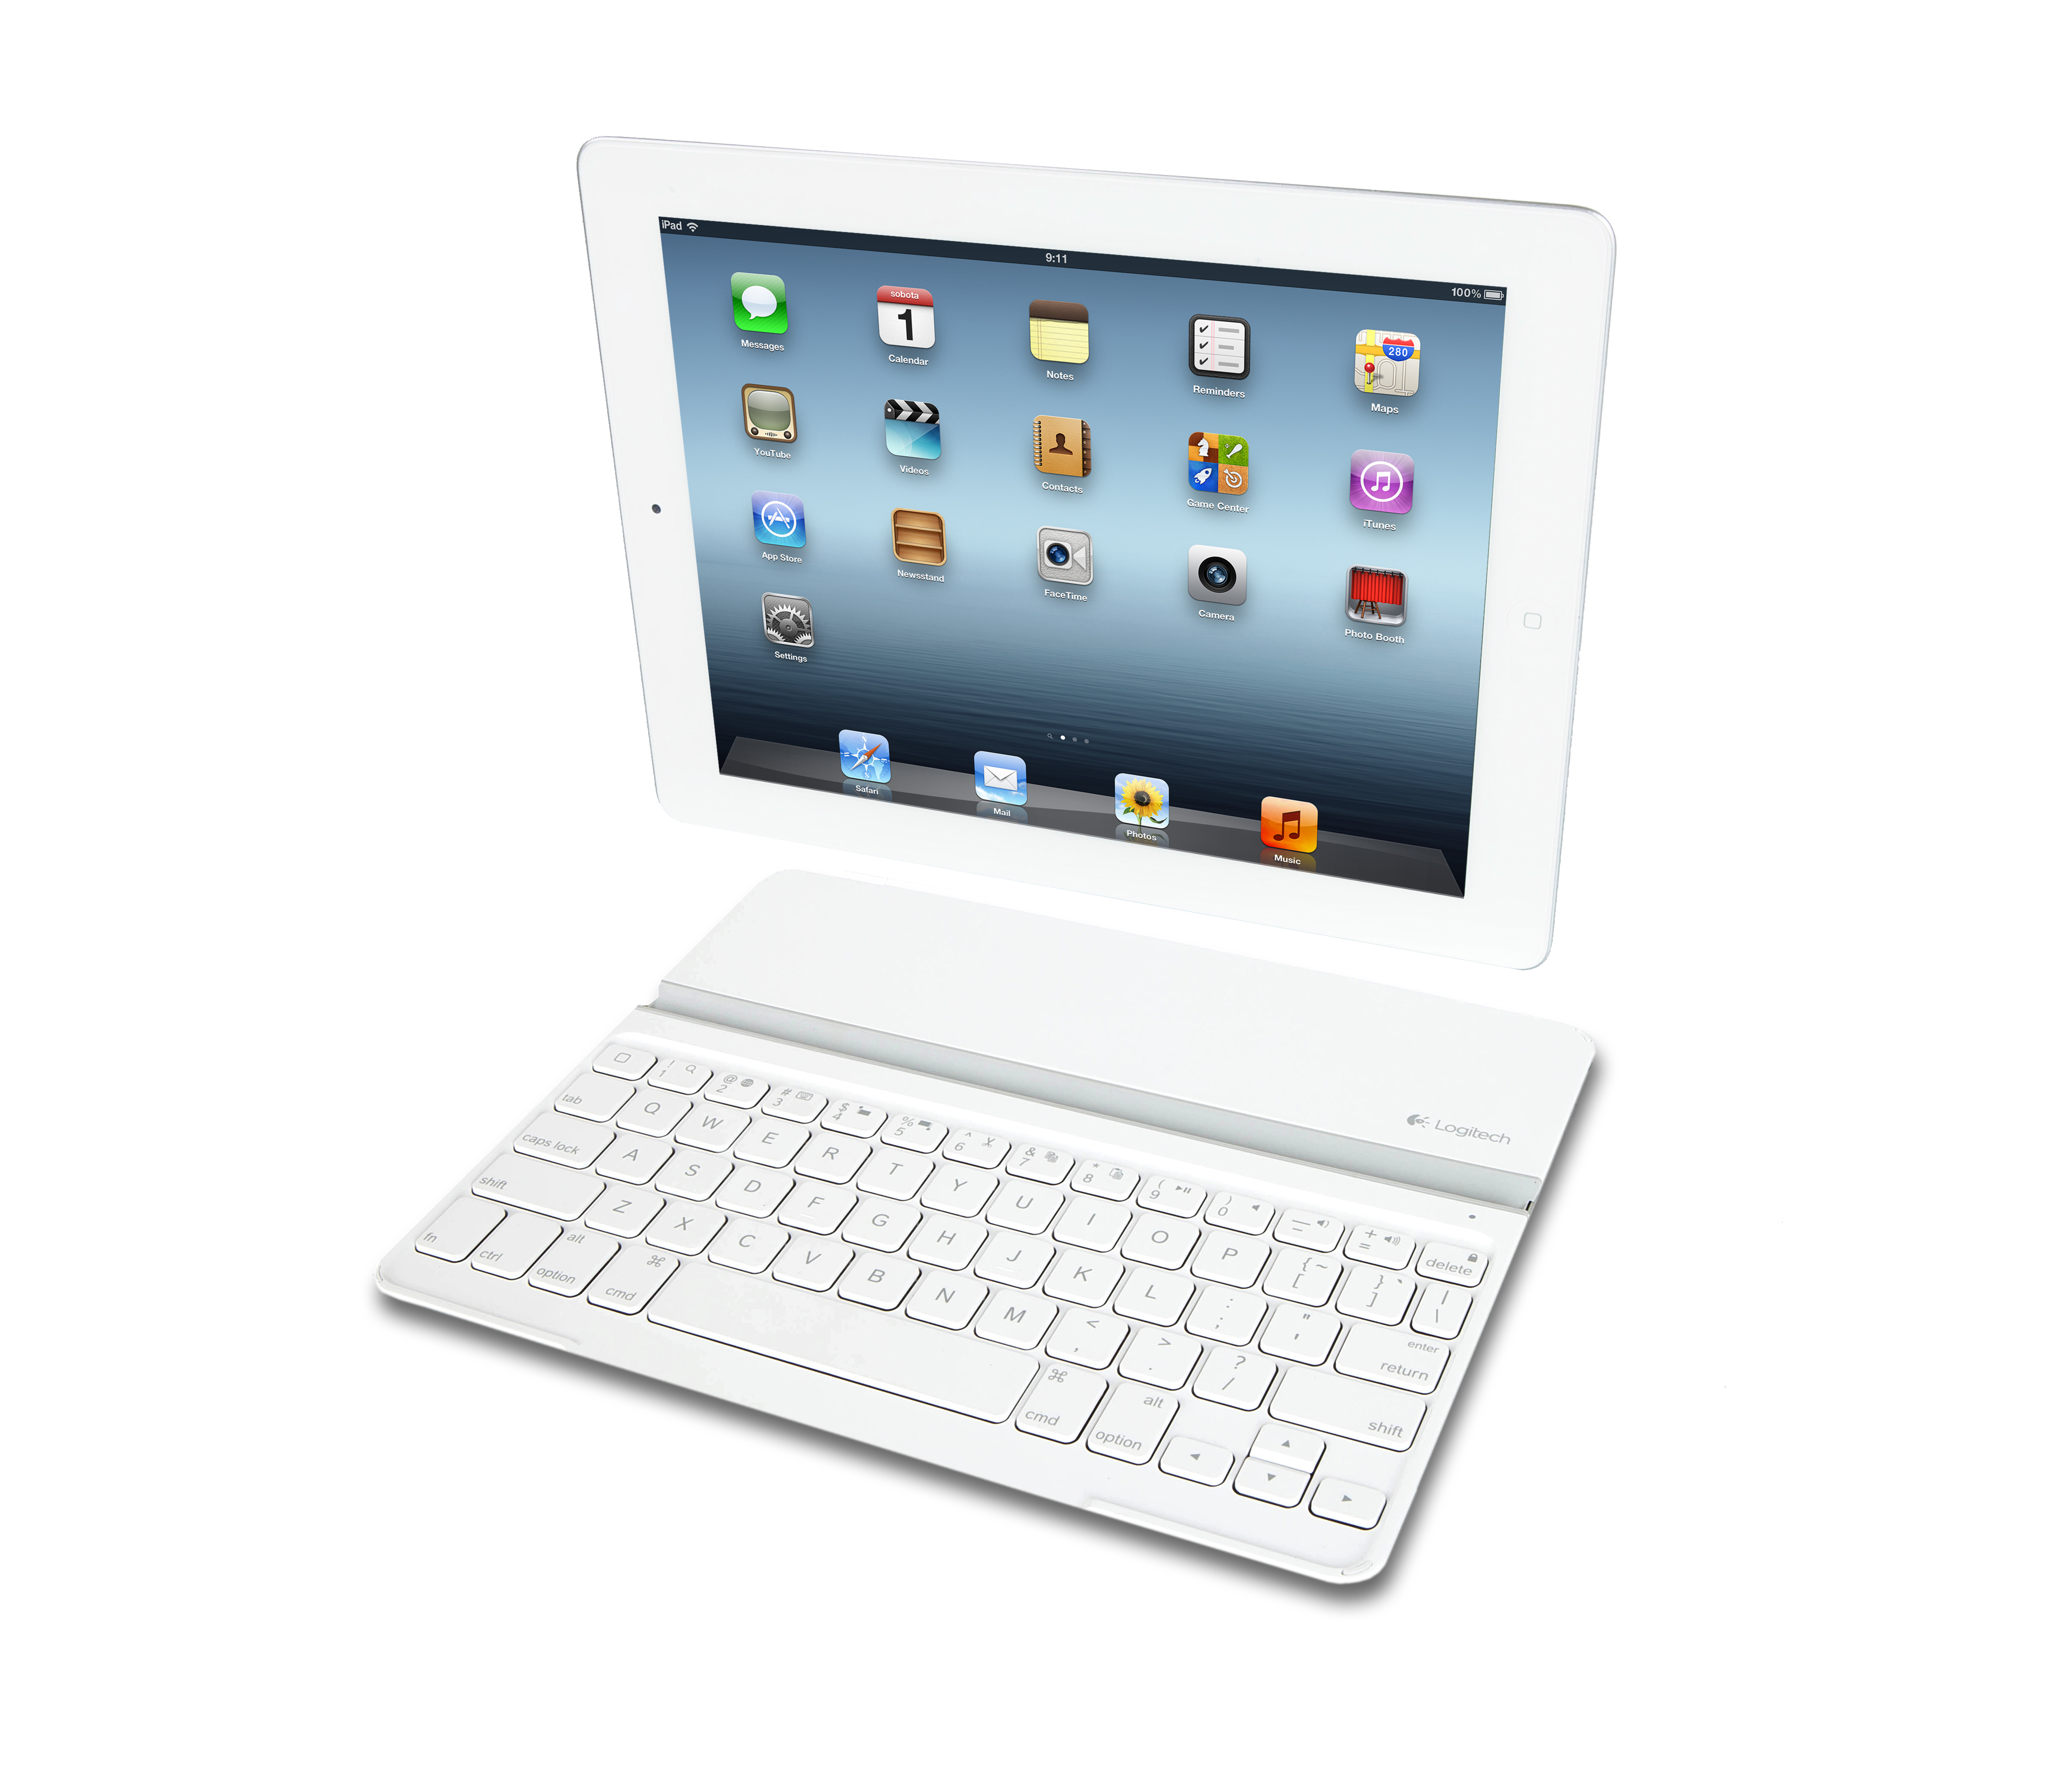 Logitech Ultrathin Keyboard Cover for iPad Air White